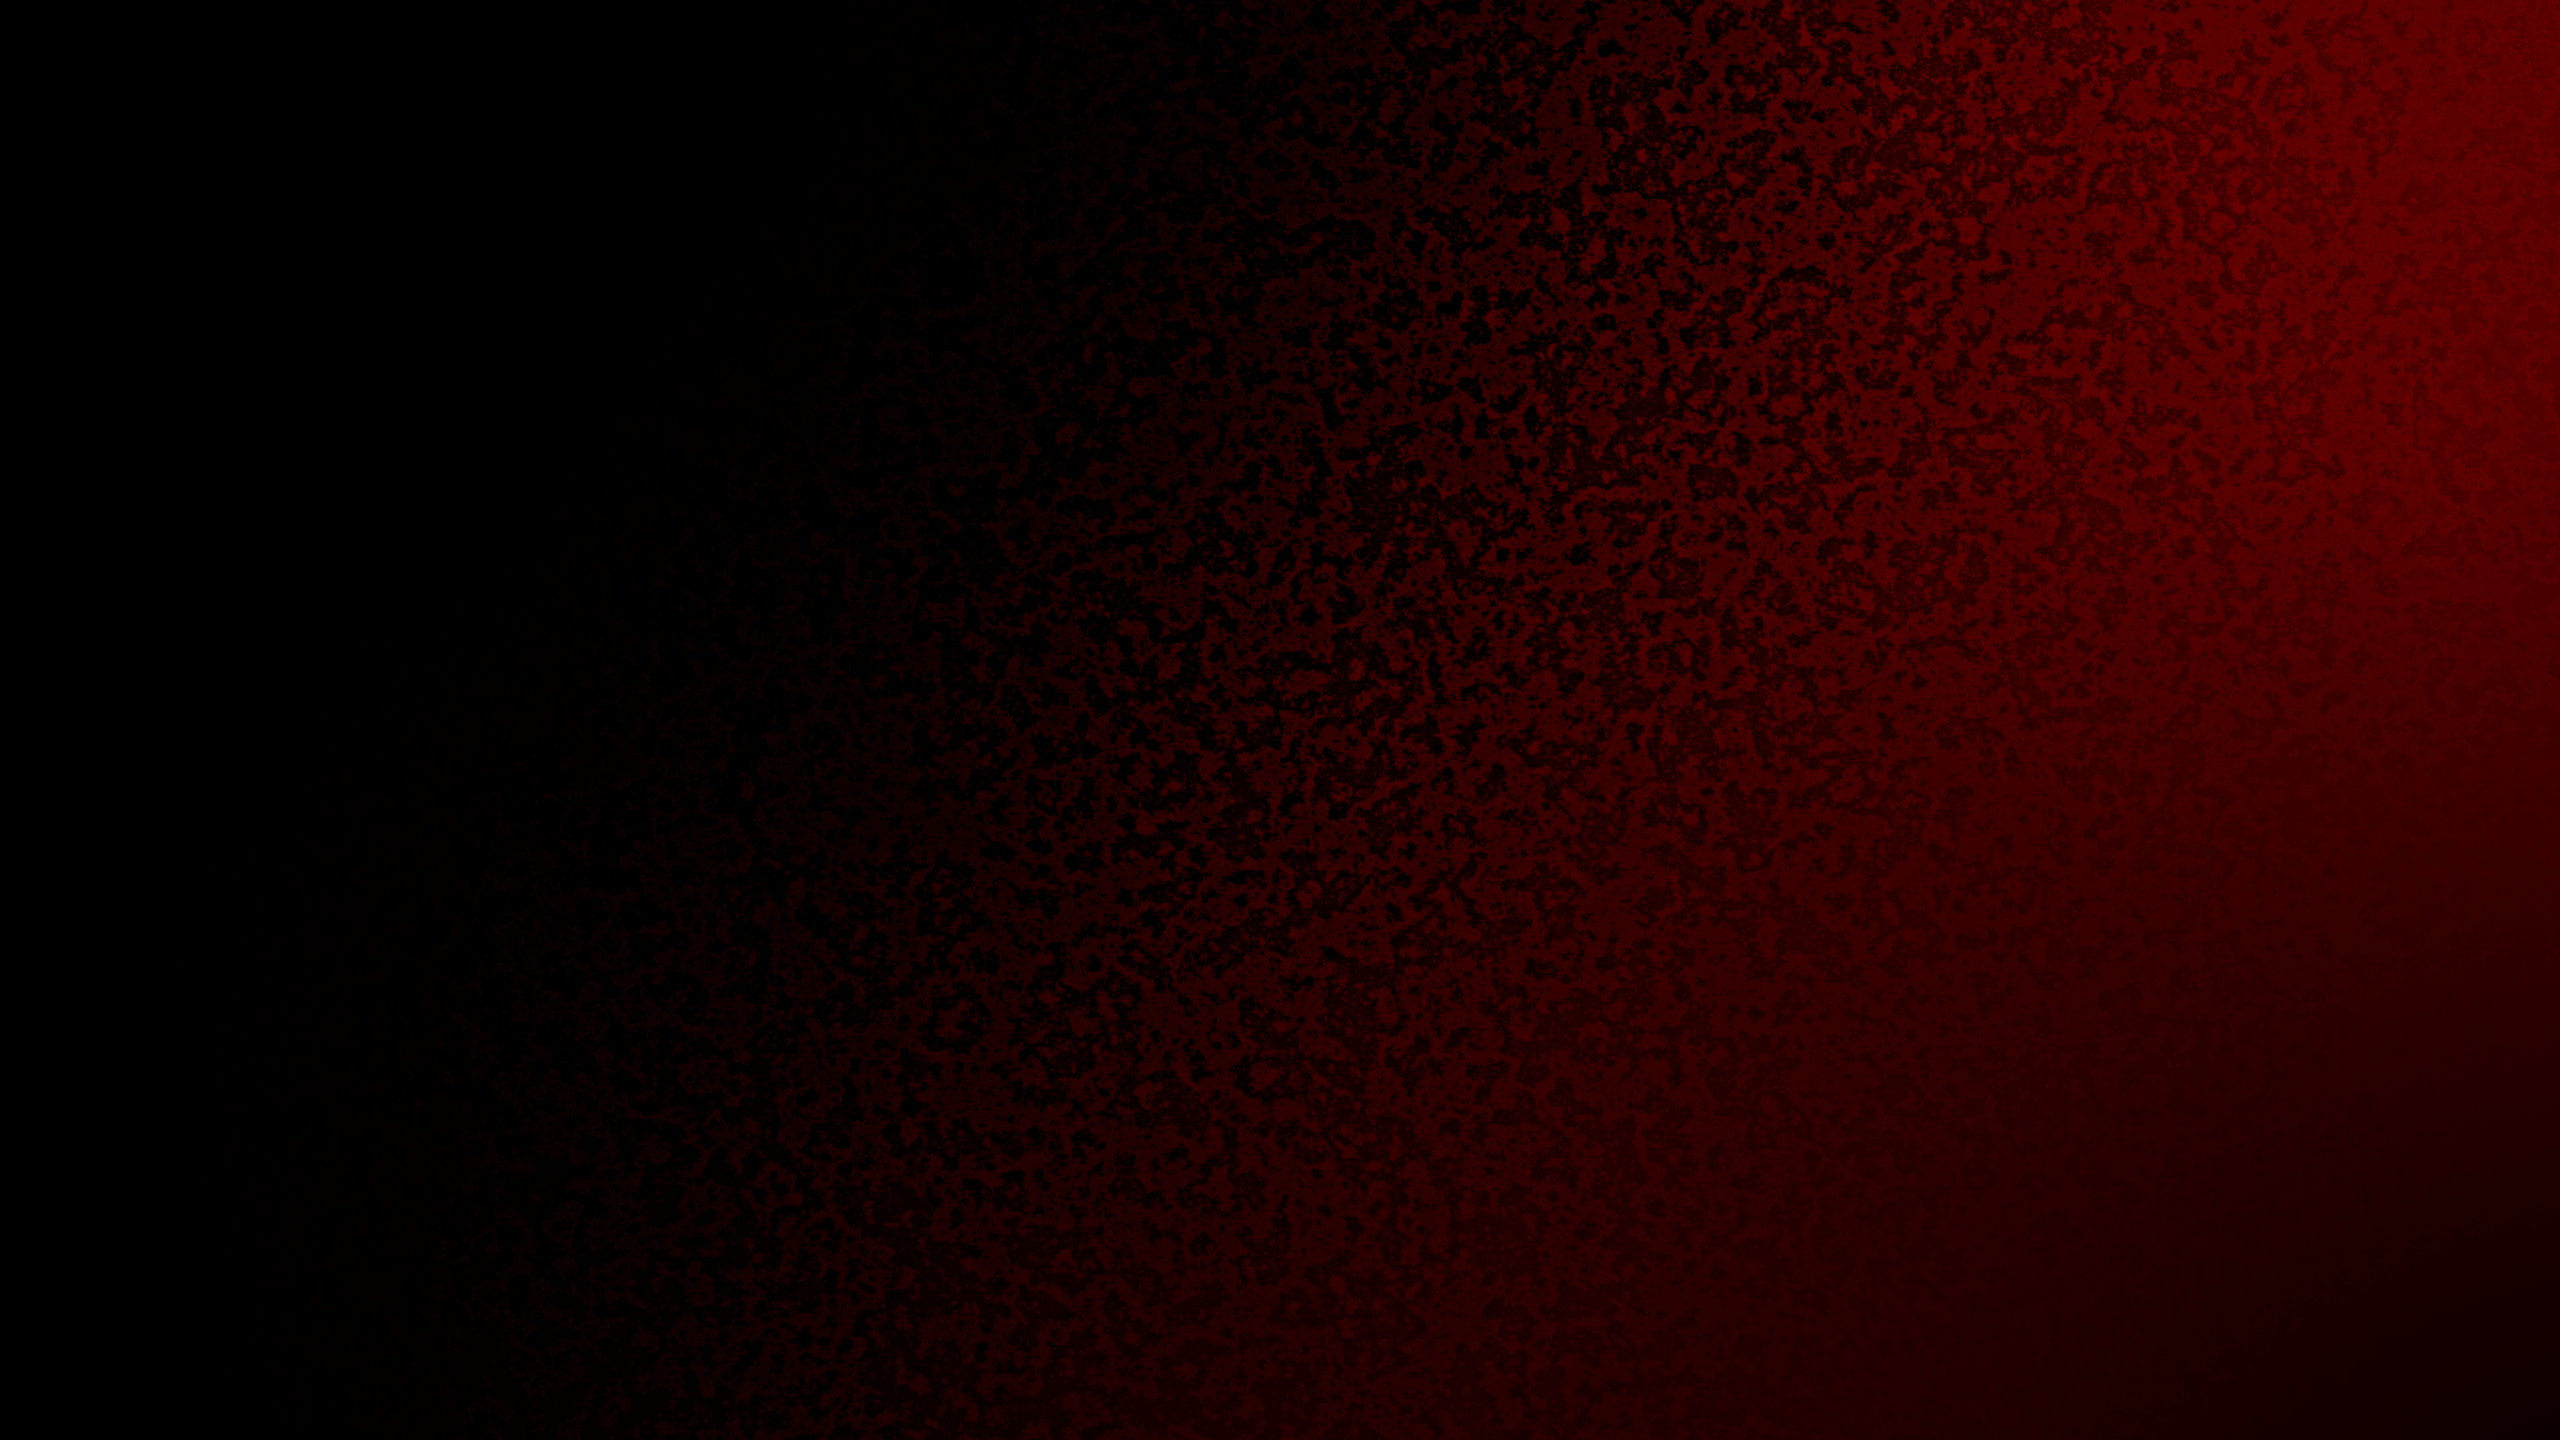 Wallpaper, black, dark, abstract, red, simple, texture, circle